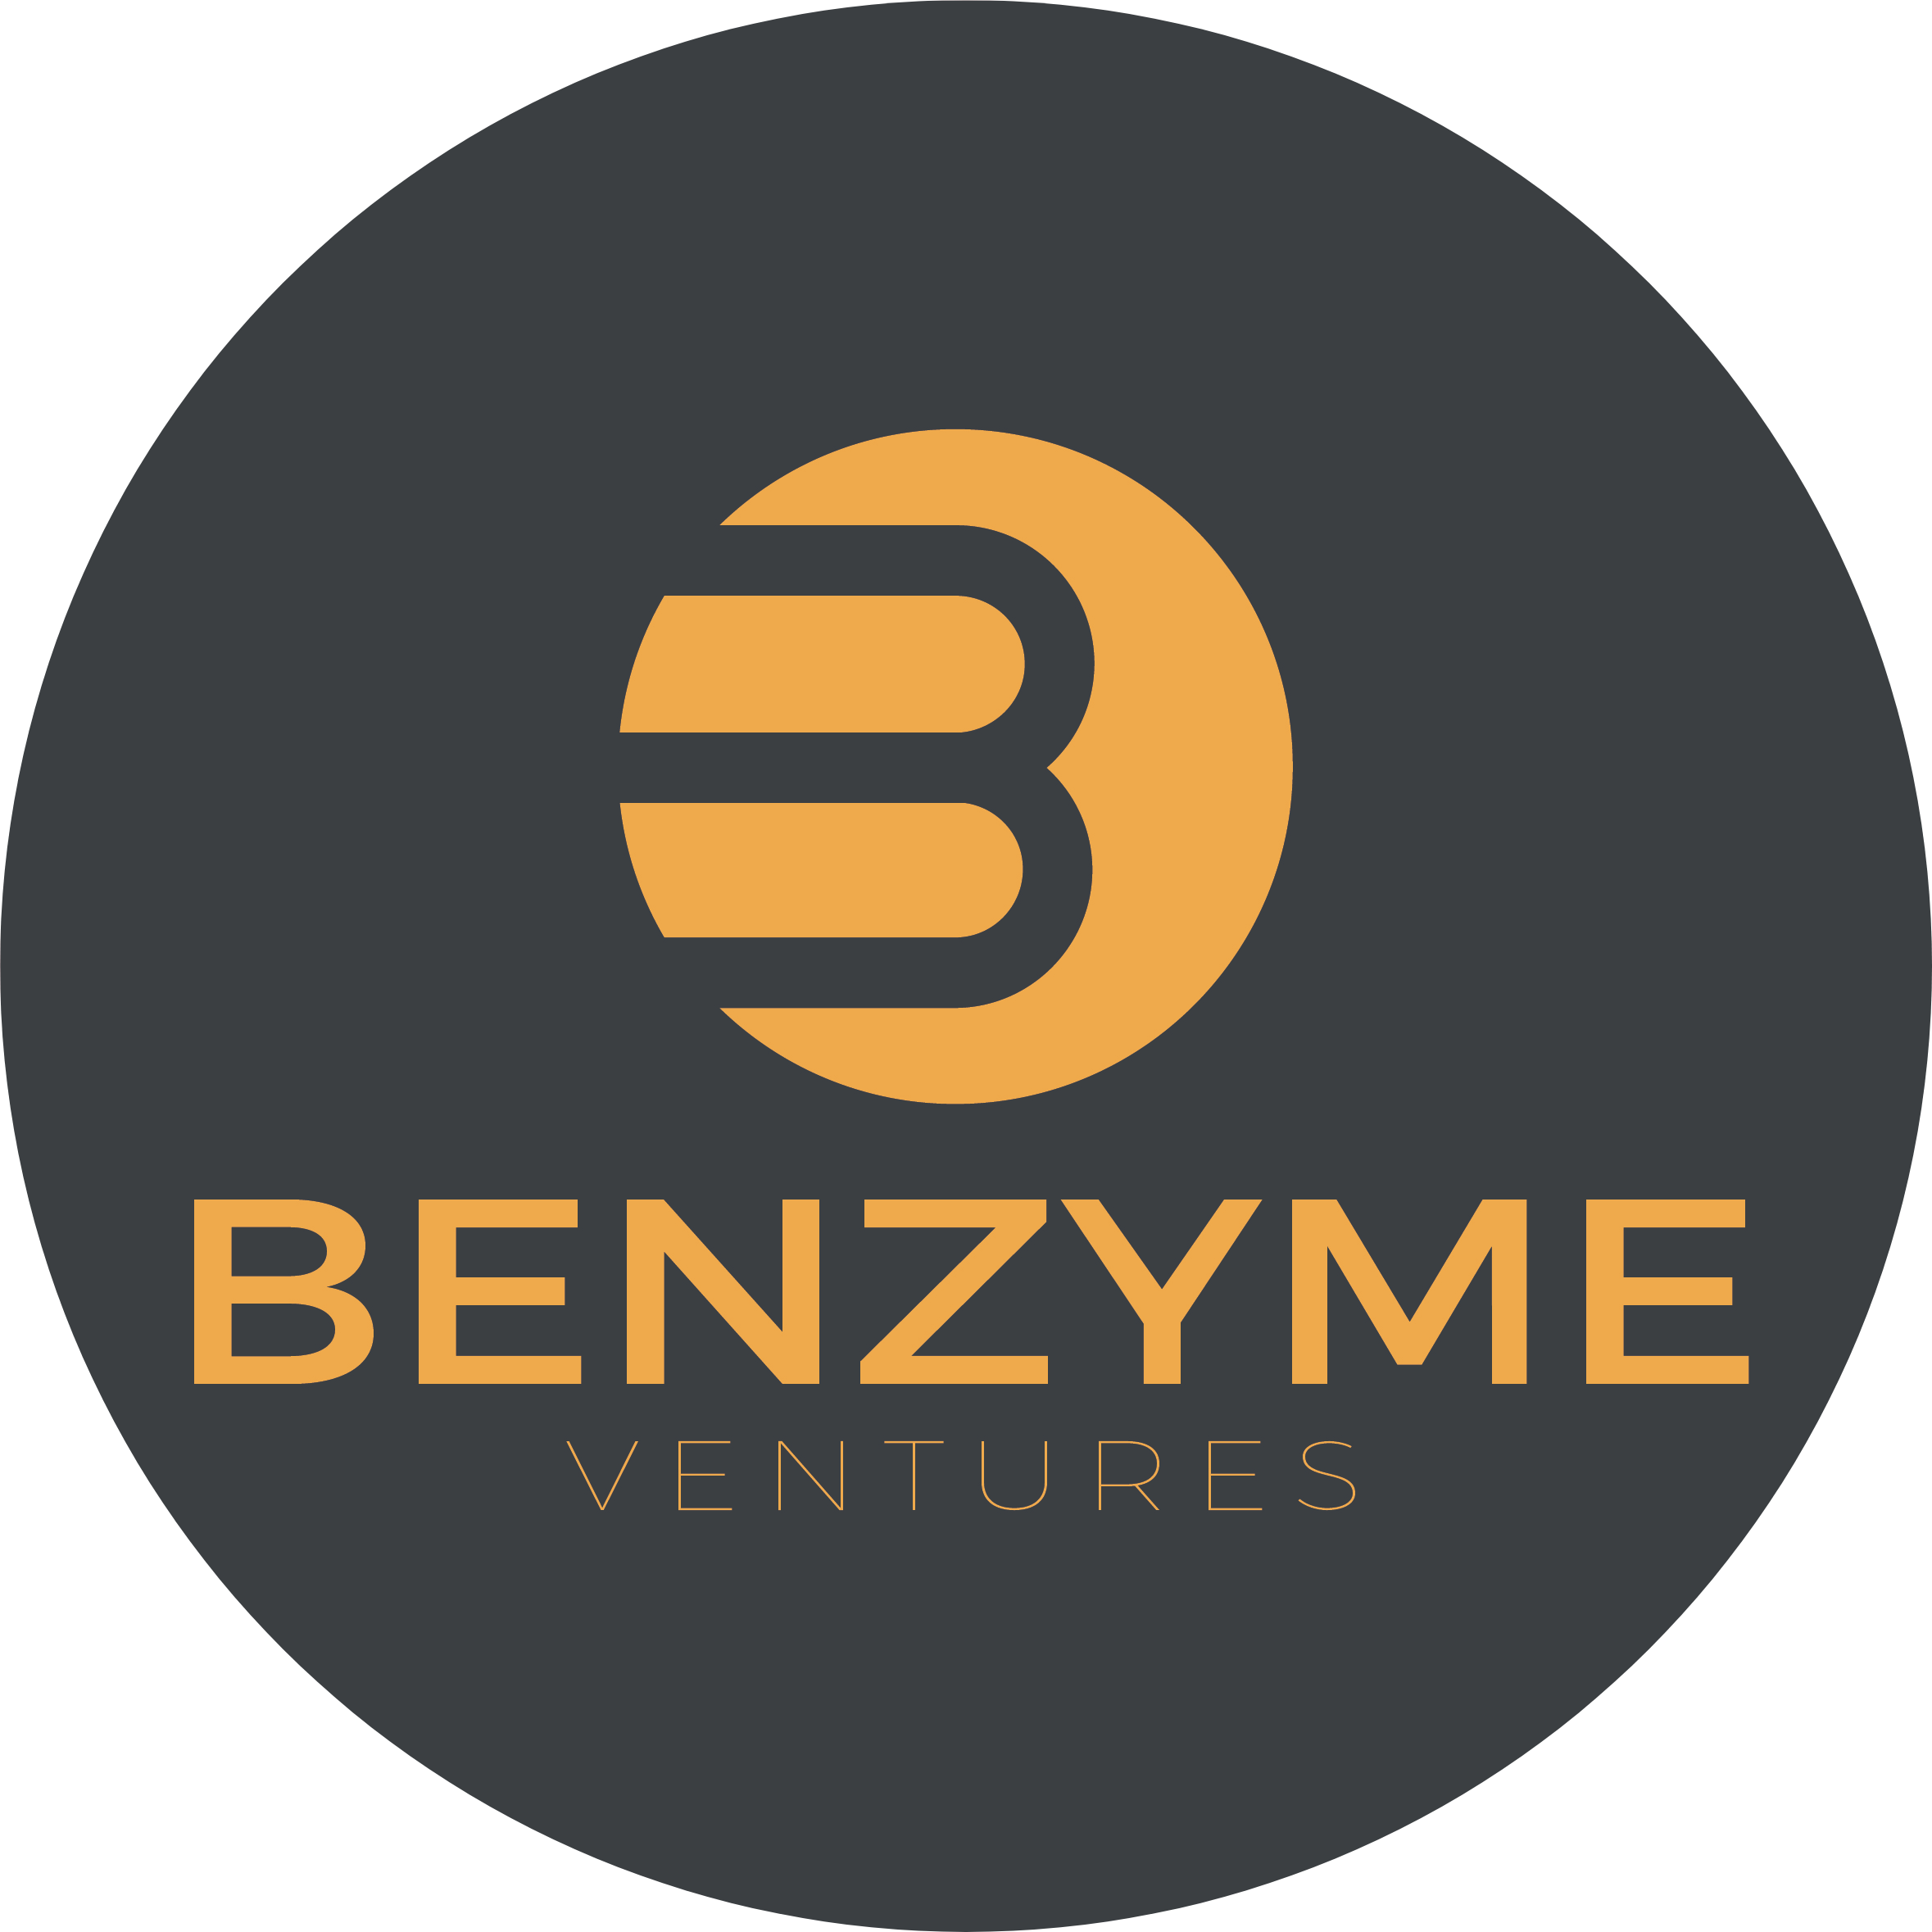 Benzyme Ventures